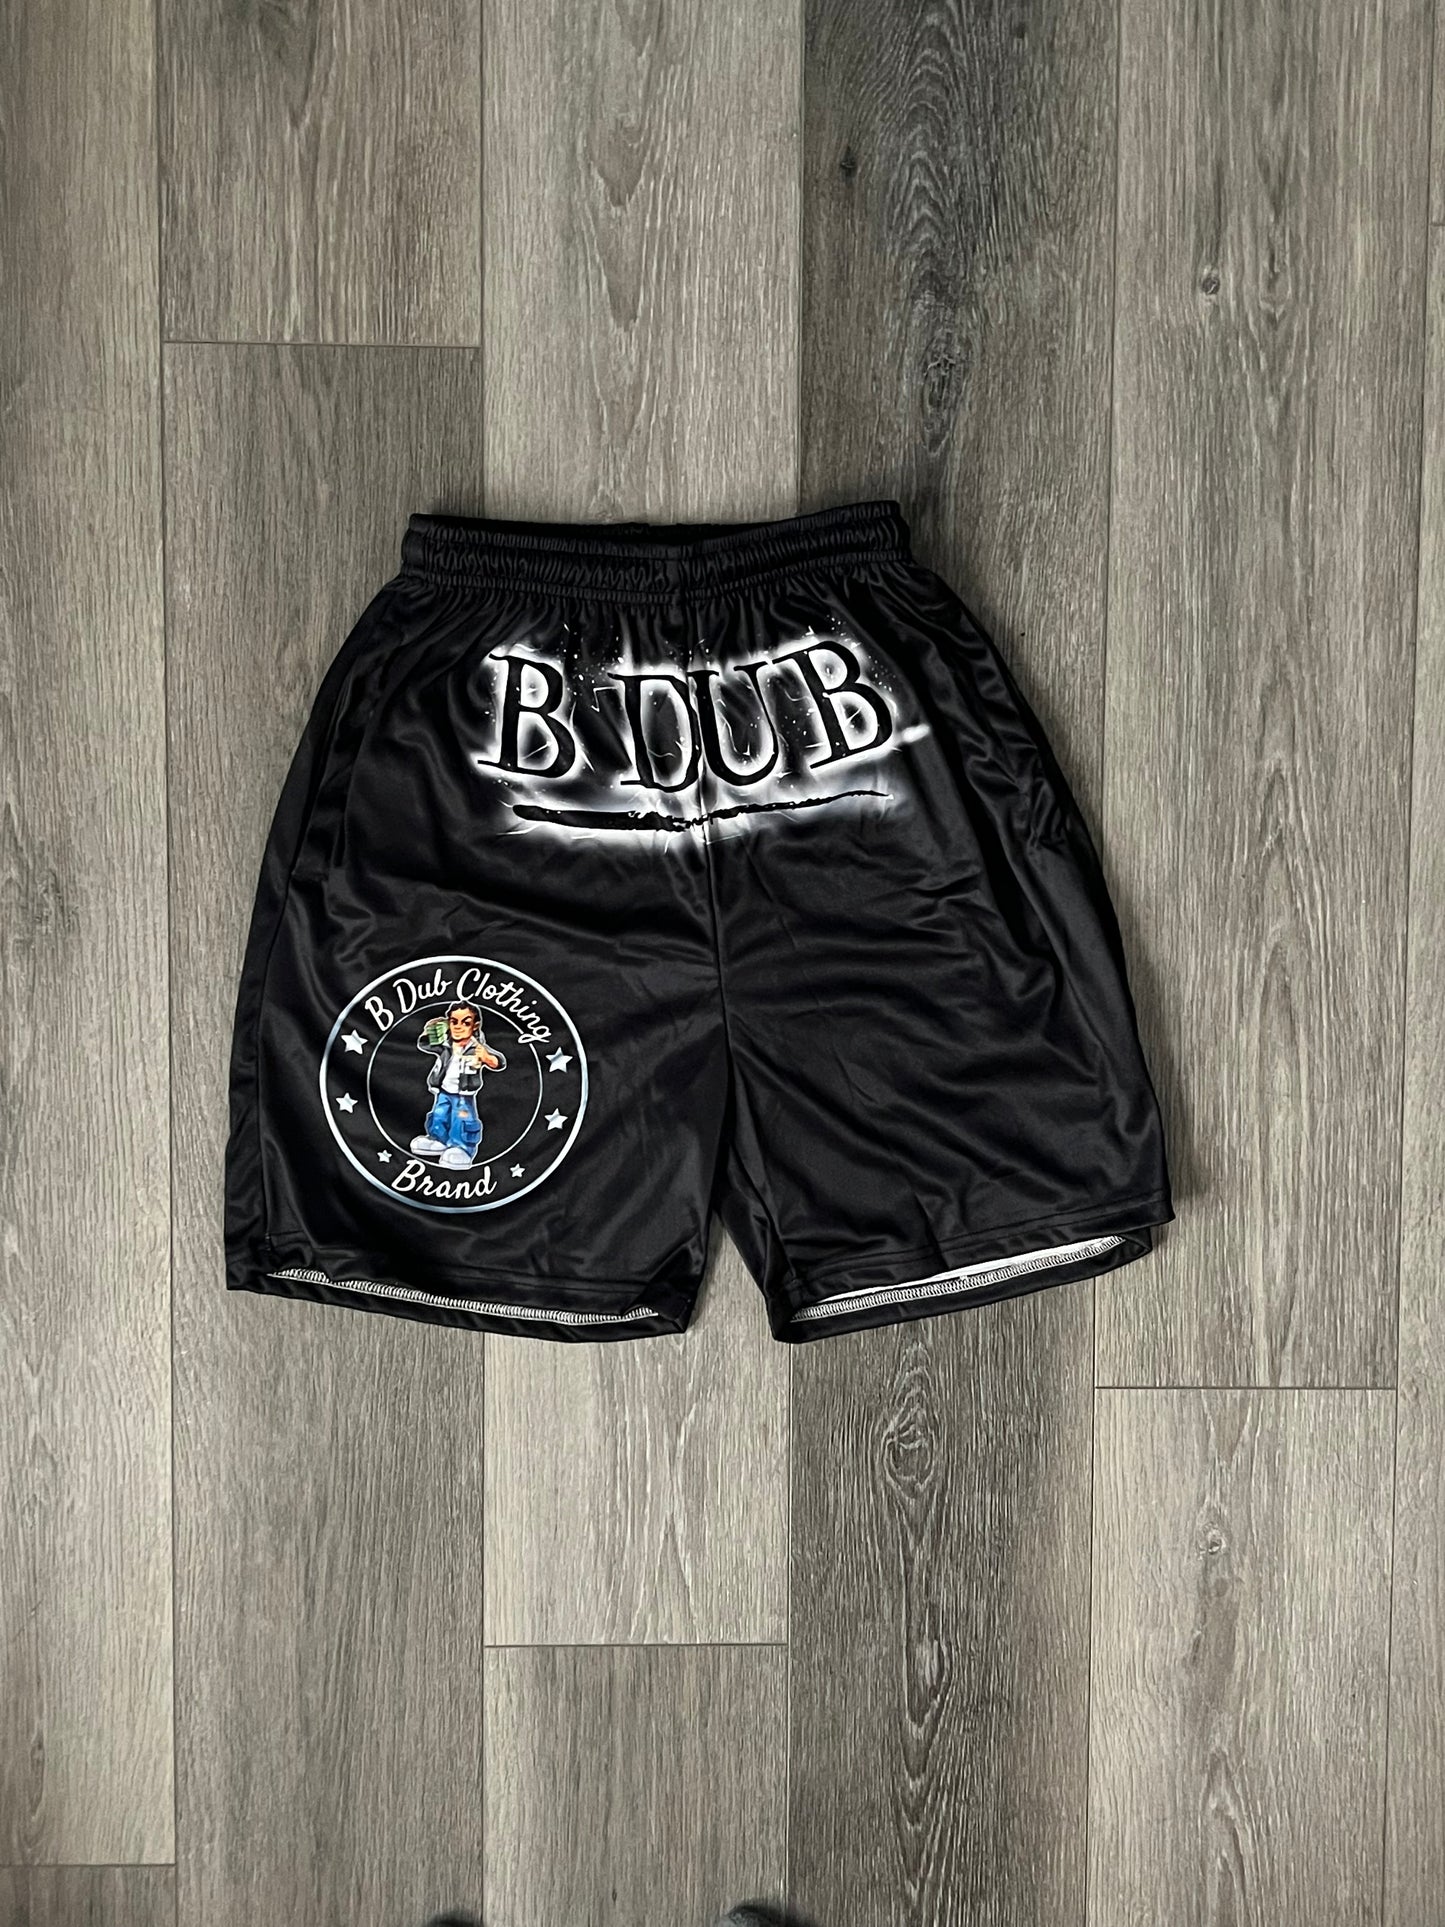 Black "B Dub" Shorts